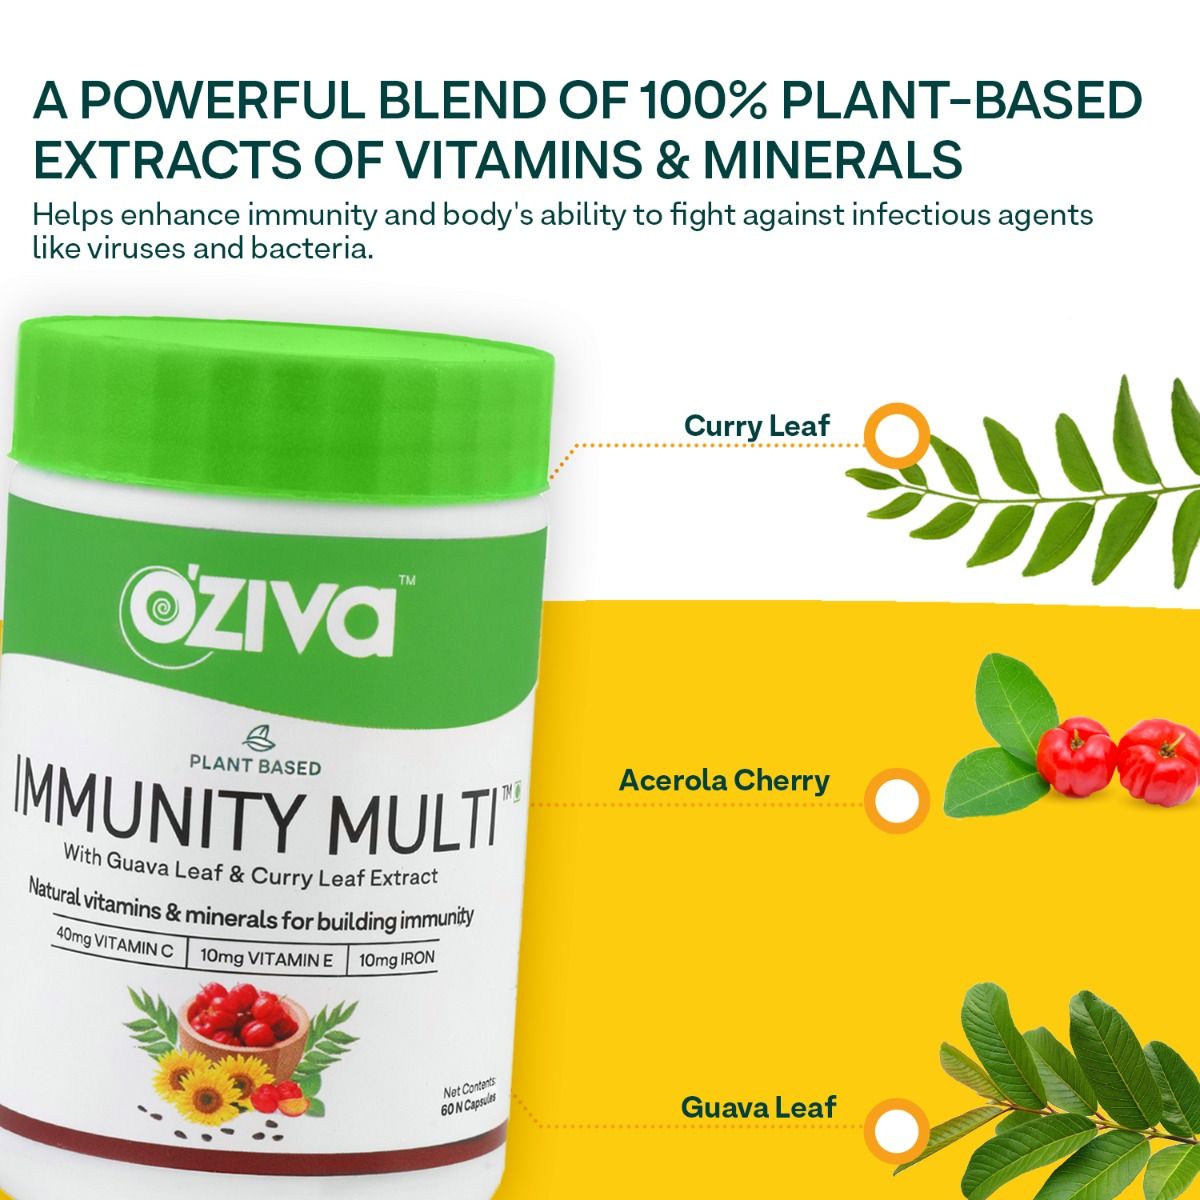 OZiva Immunity Multi, 60 Capsules, Pack of 1 